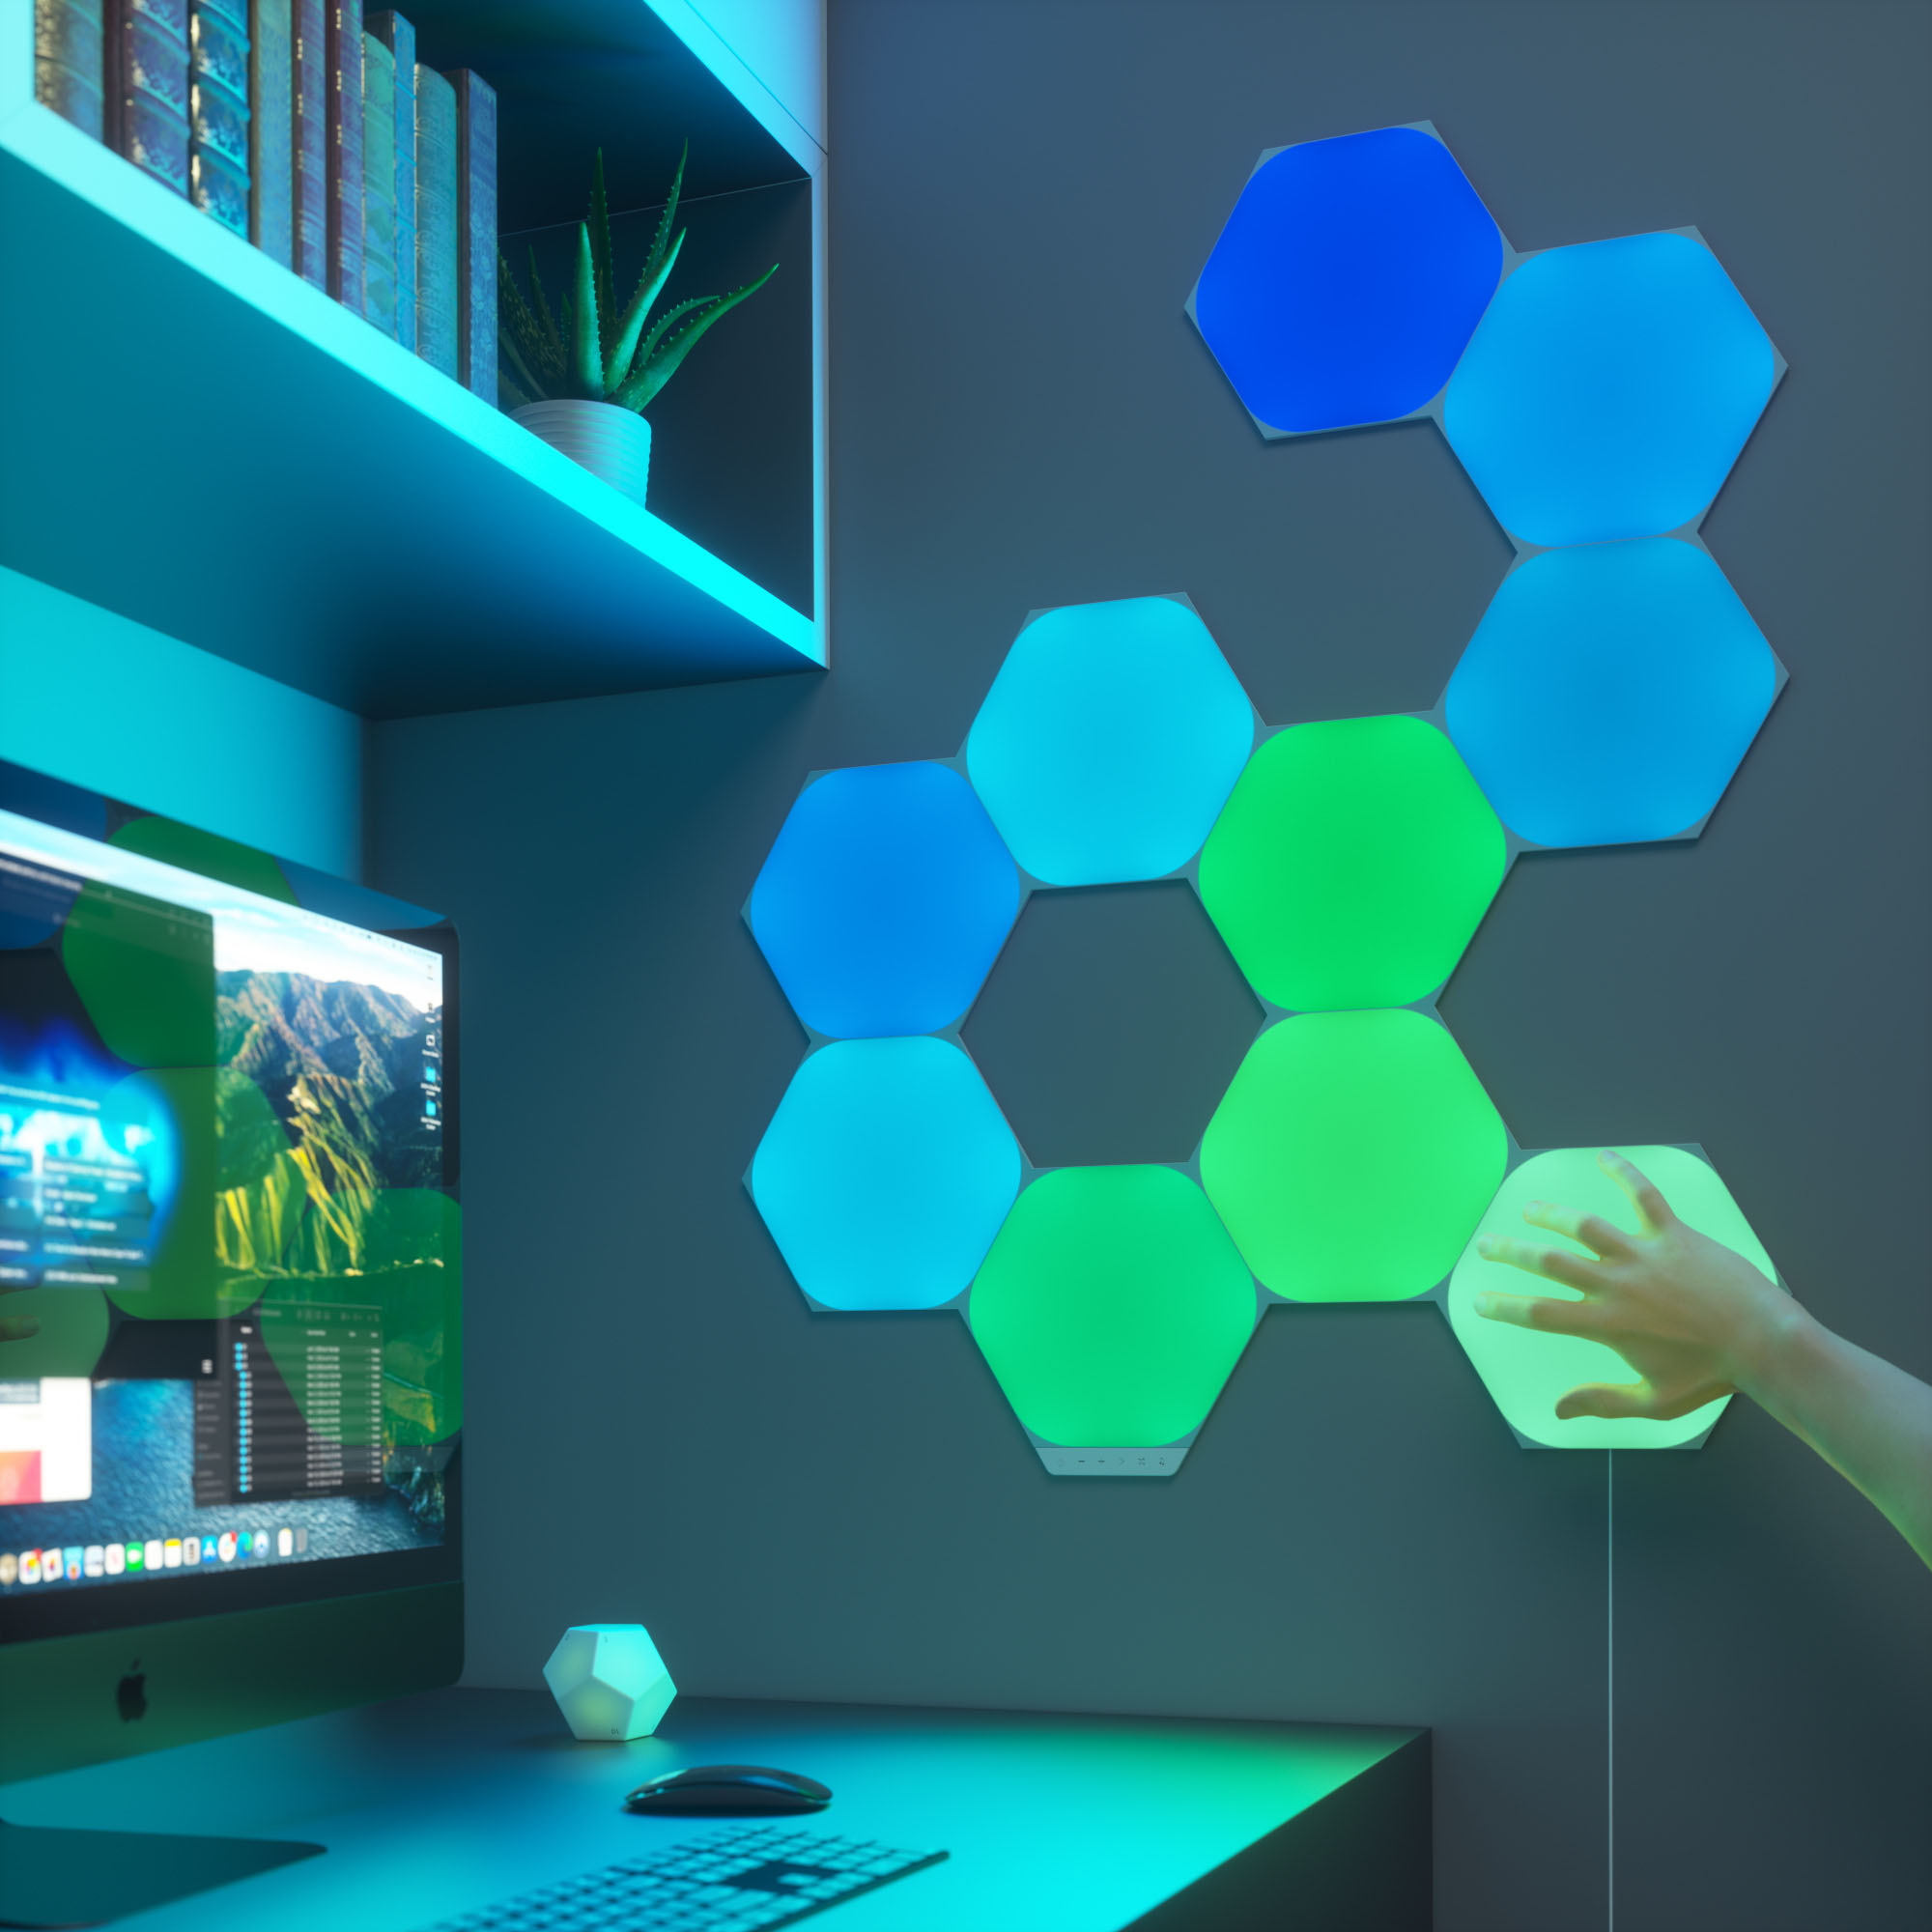 8 Pack Hexagon Light Panels - Smart Rgb Hexagon Led Lights Wall